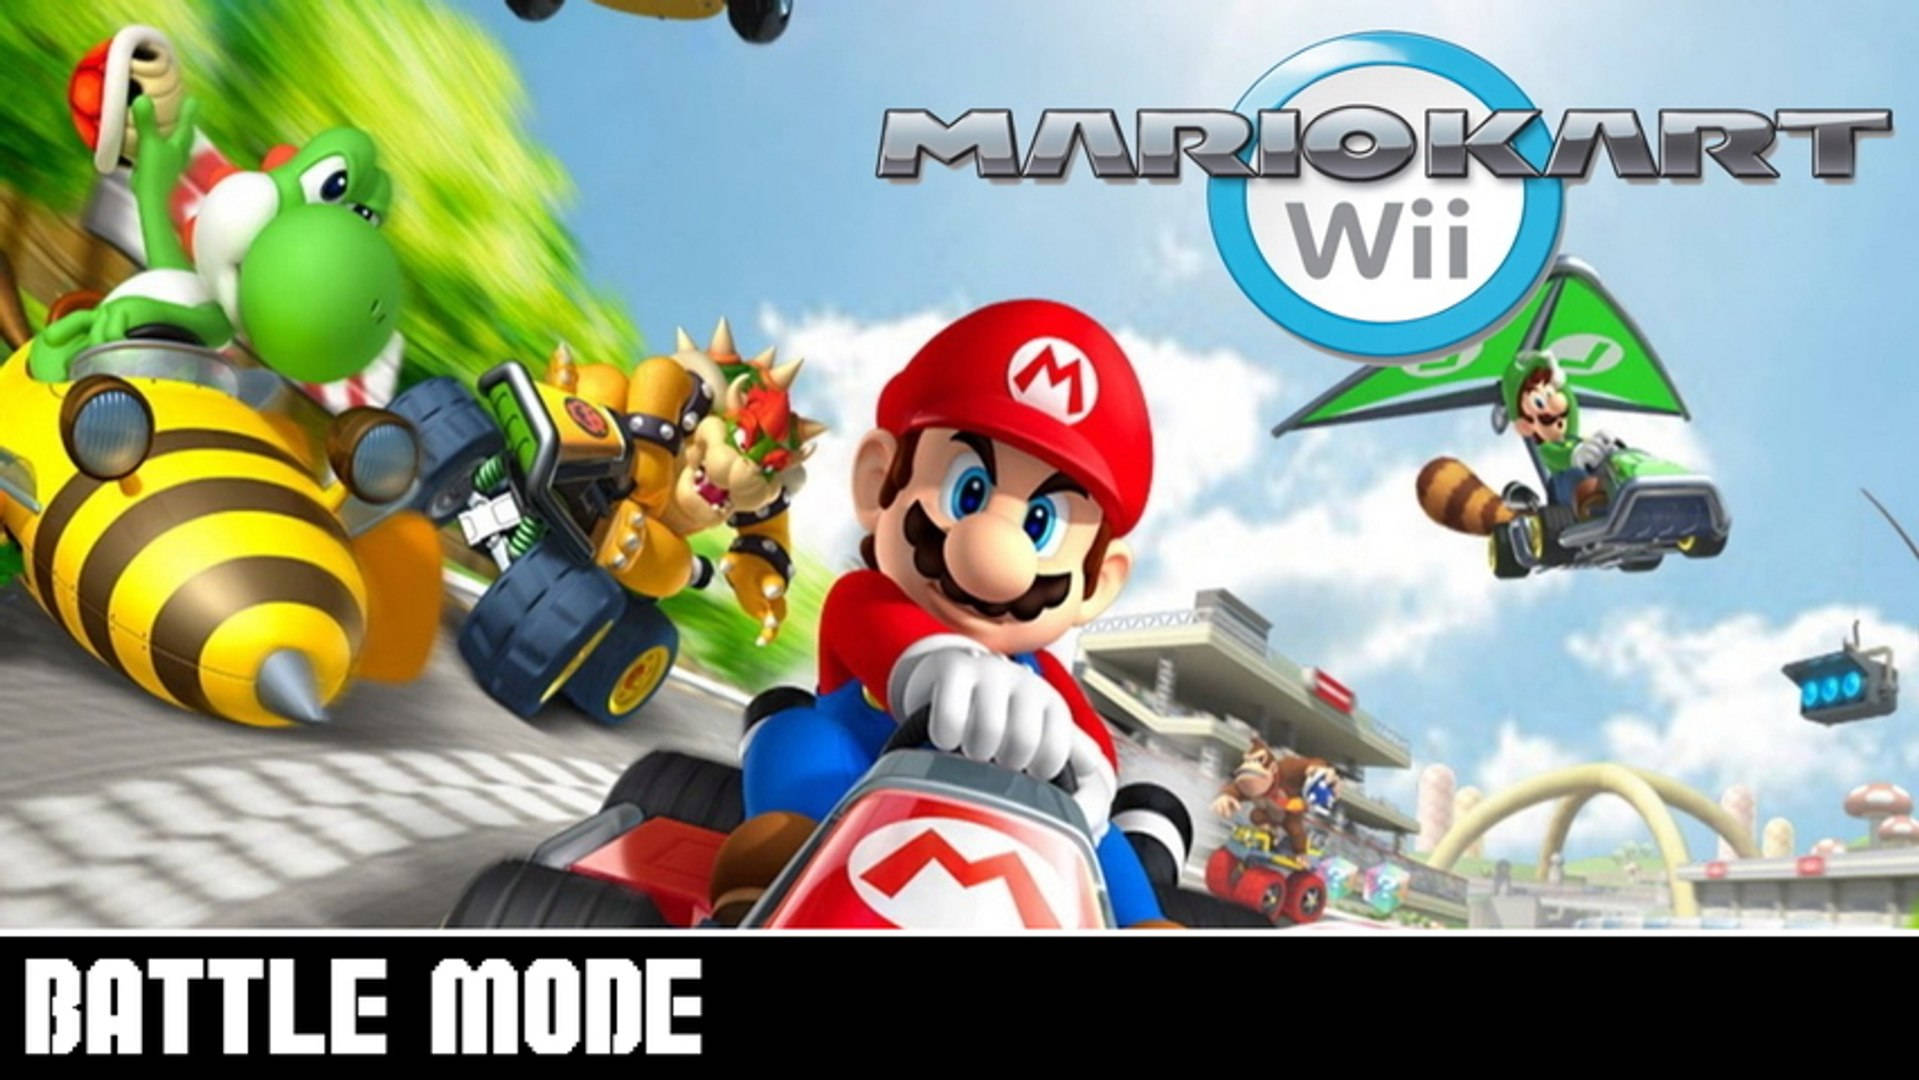 Online Game Mario Kart Wii Battle Mode Poster Wallpaper